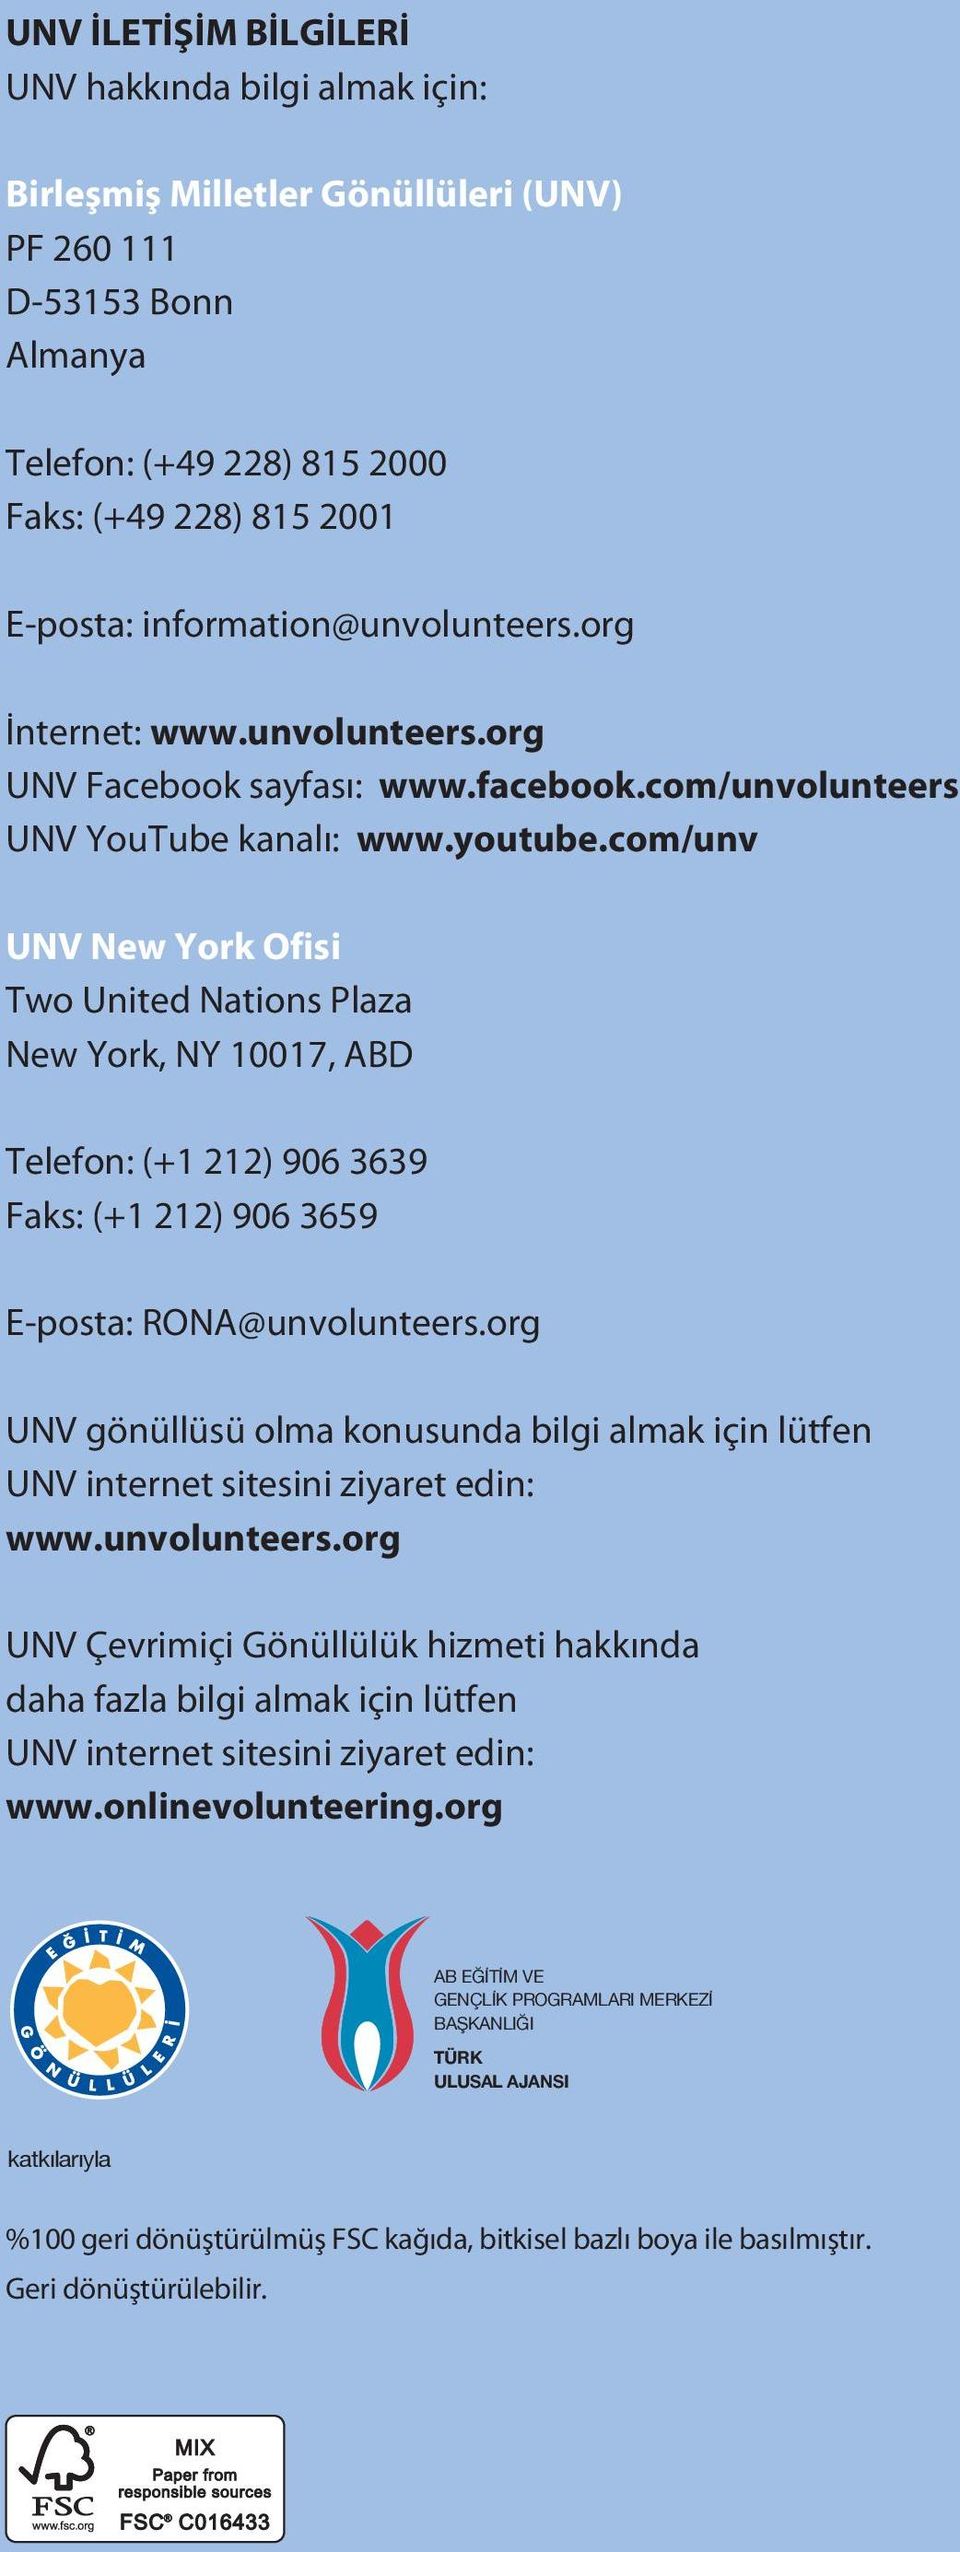 com/unv UNV New York Ofisi Two United Nations Plaza New York, NY 10017, ABD Telefon: (+1 212) 906 3639 Faks: (+1 212) 906 3659 E-posta: RONA@unvolunteers.